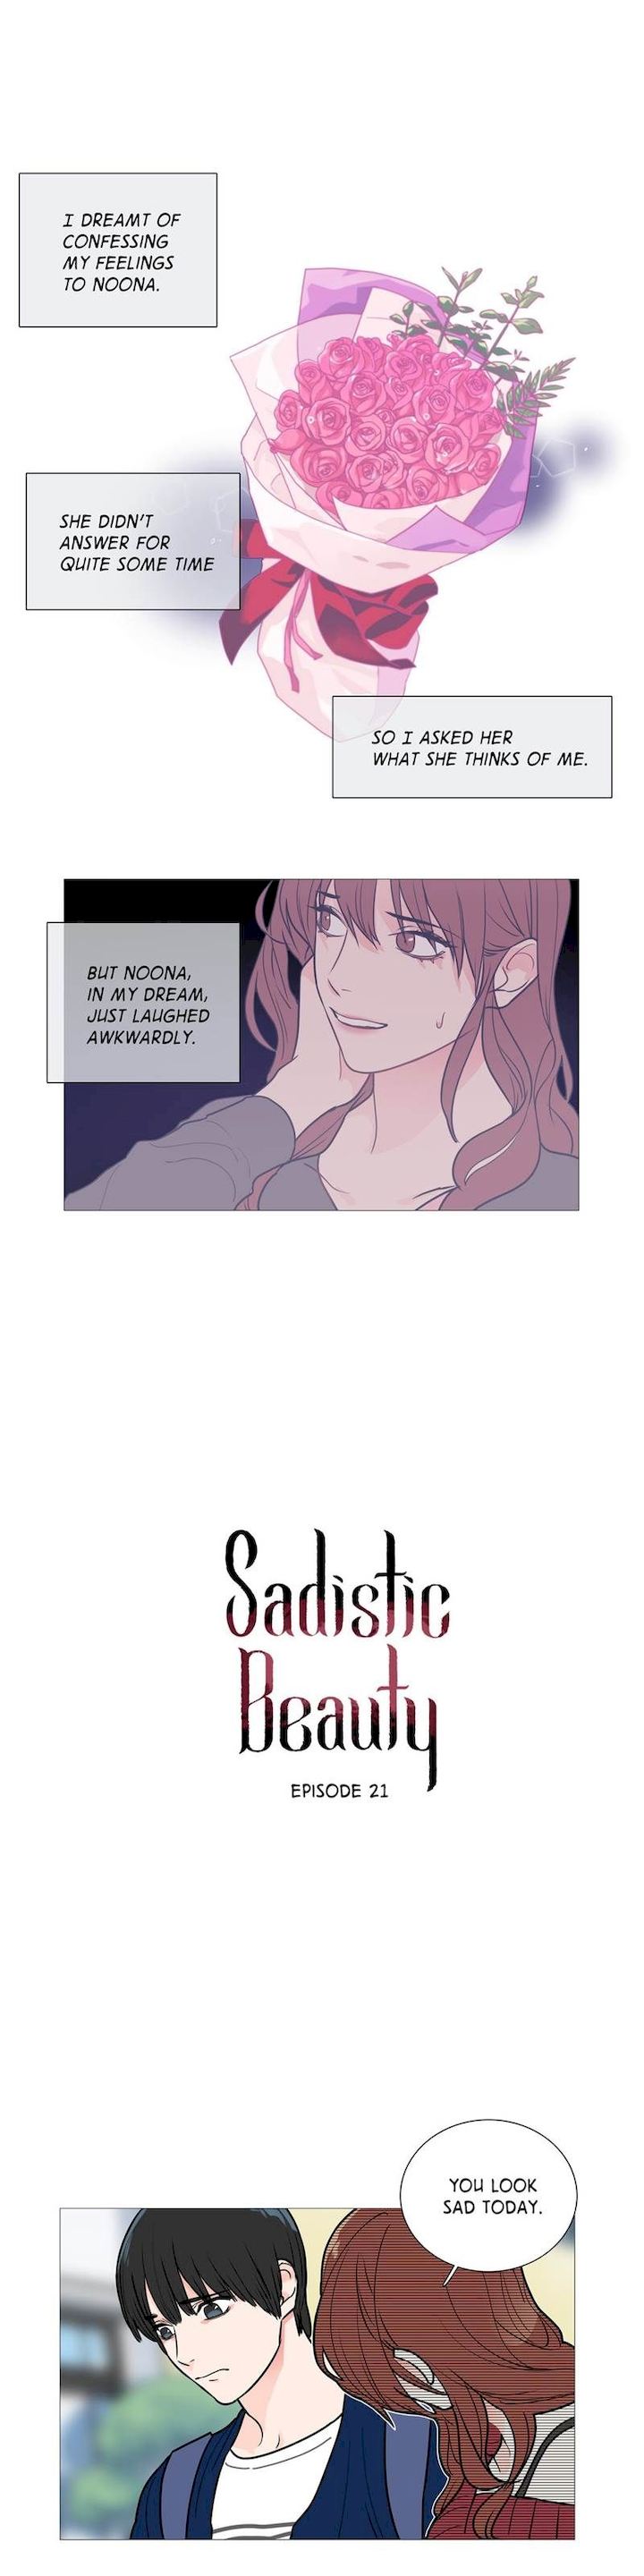 Sadistic Beauty - Chapter 21 Page 1